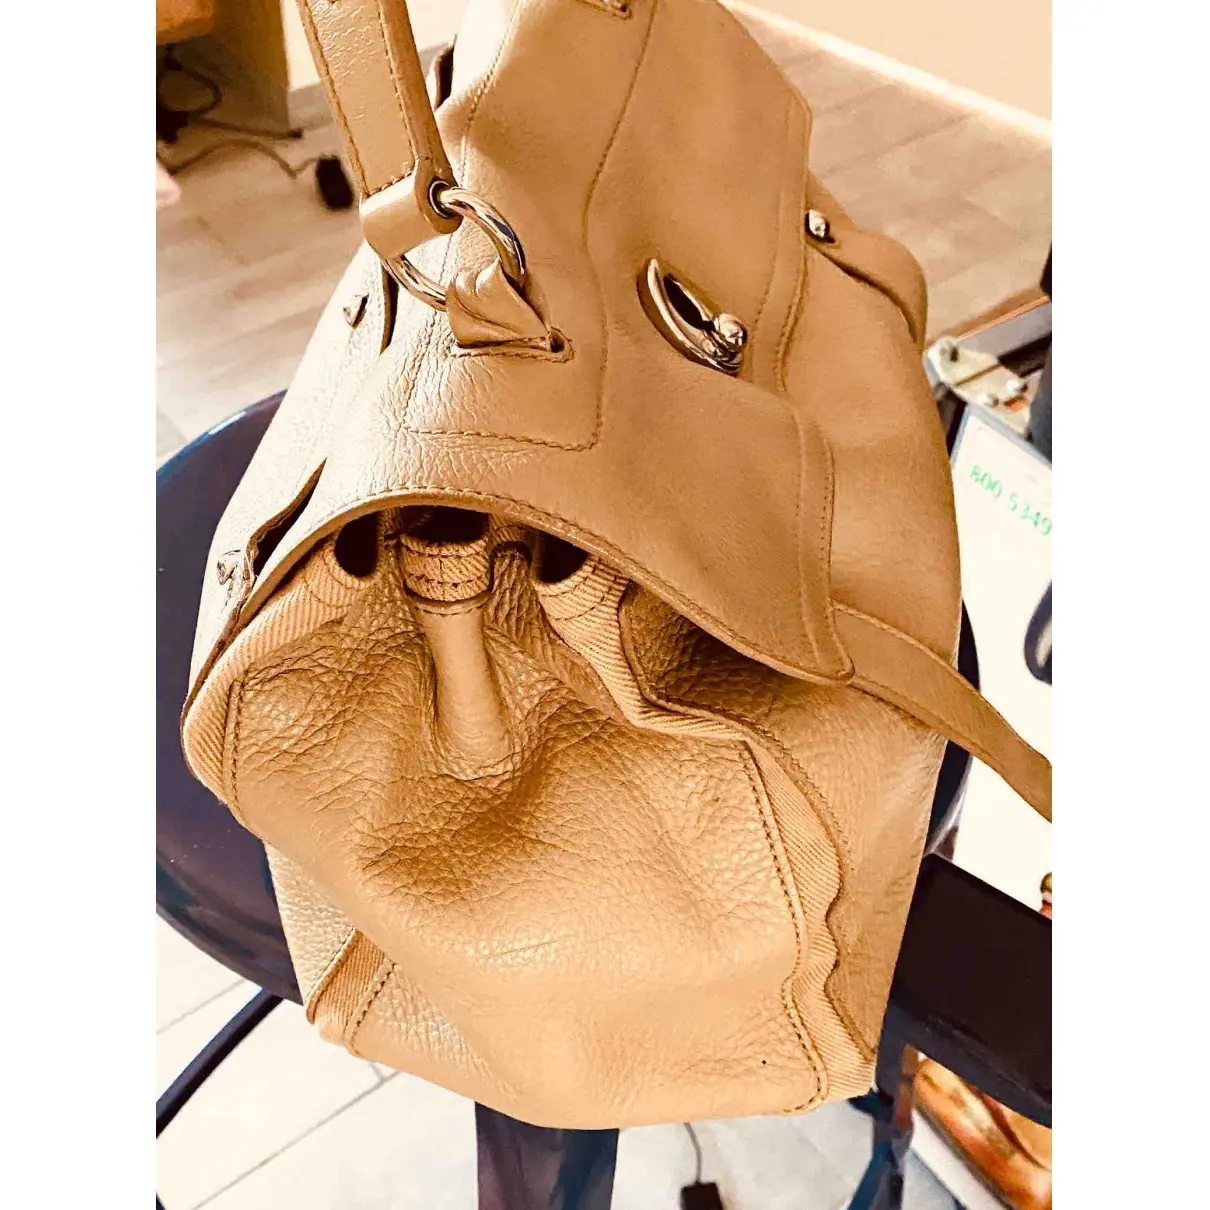 Buy Yves Saint Laurent Muse Two leather handbag online